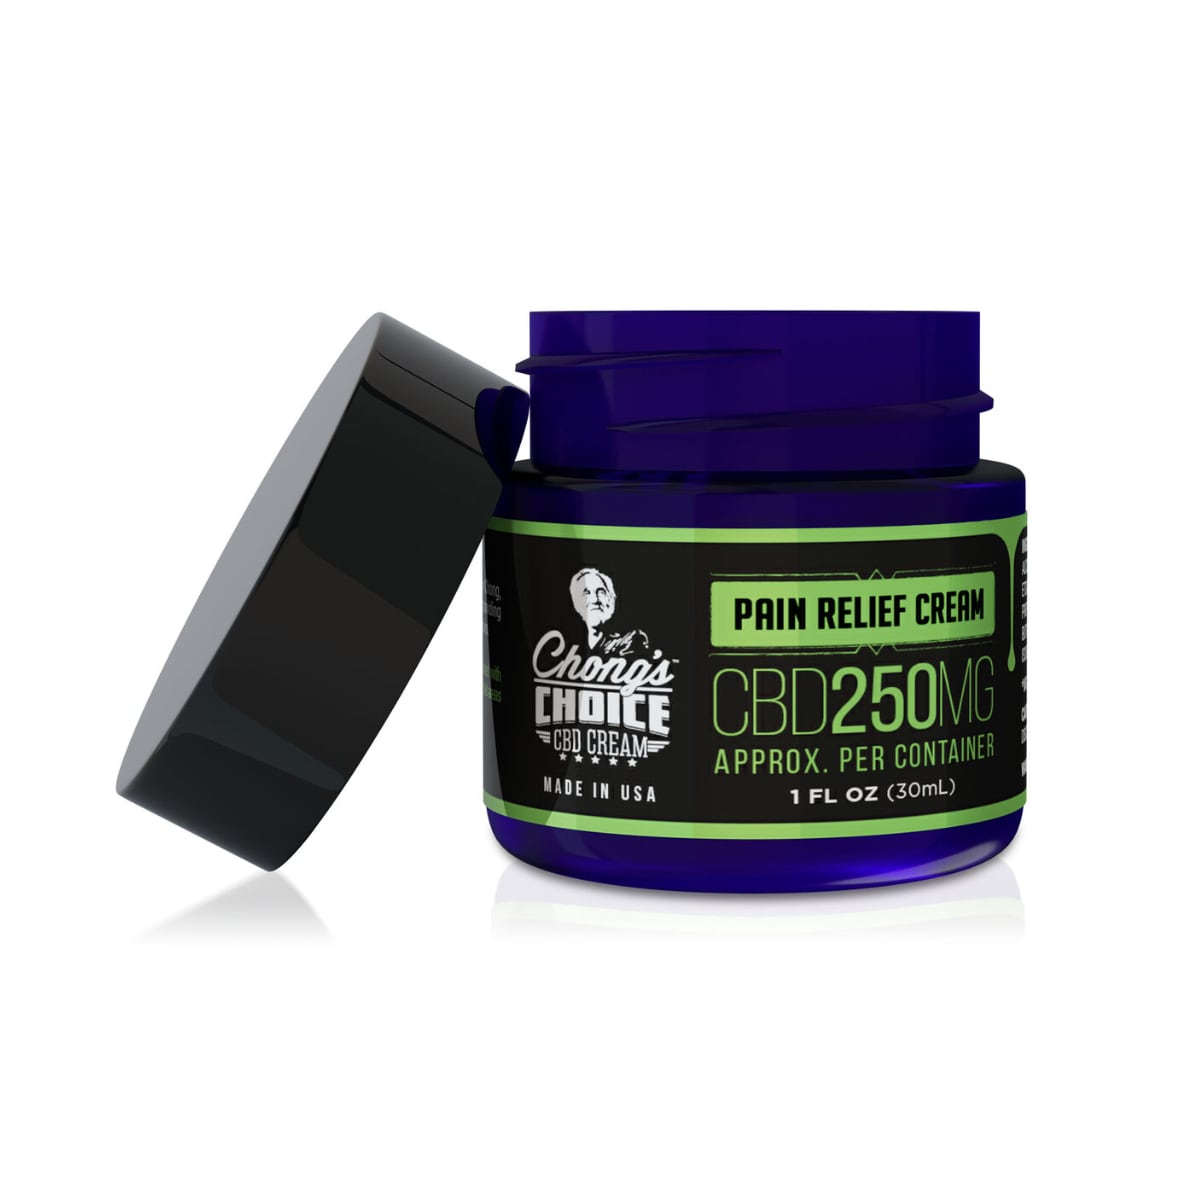 Chong’s Choice, CBD Cream, Pain Relief, Broad Spectrum THC-Free, 4oz, 250mg CBD11